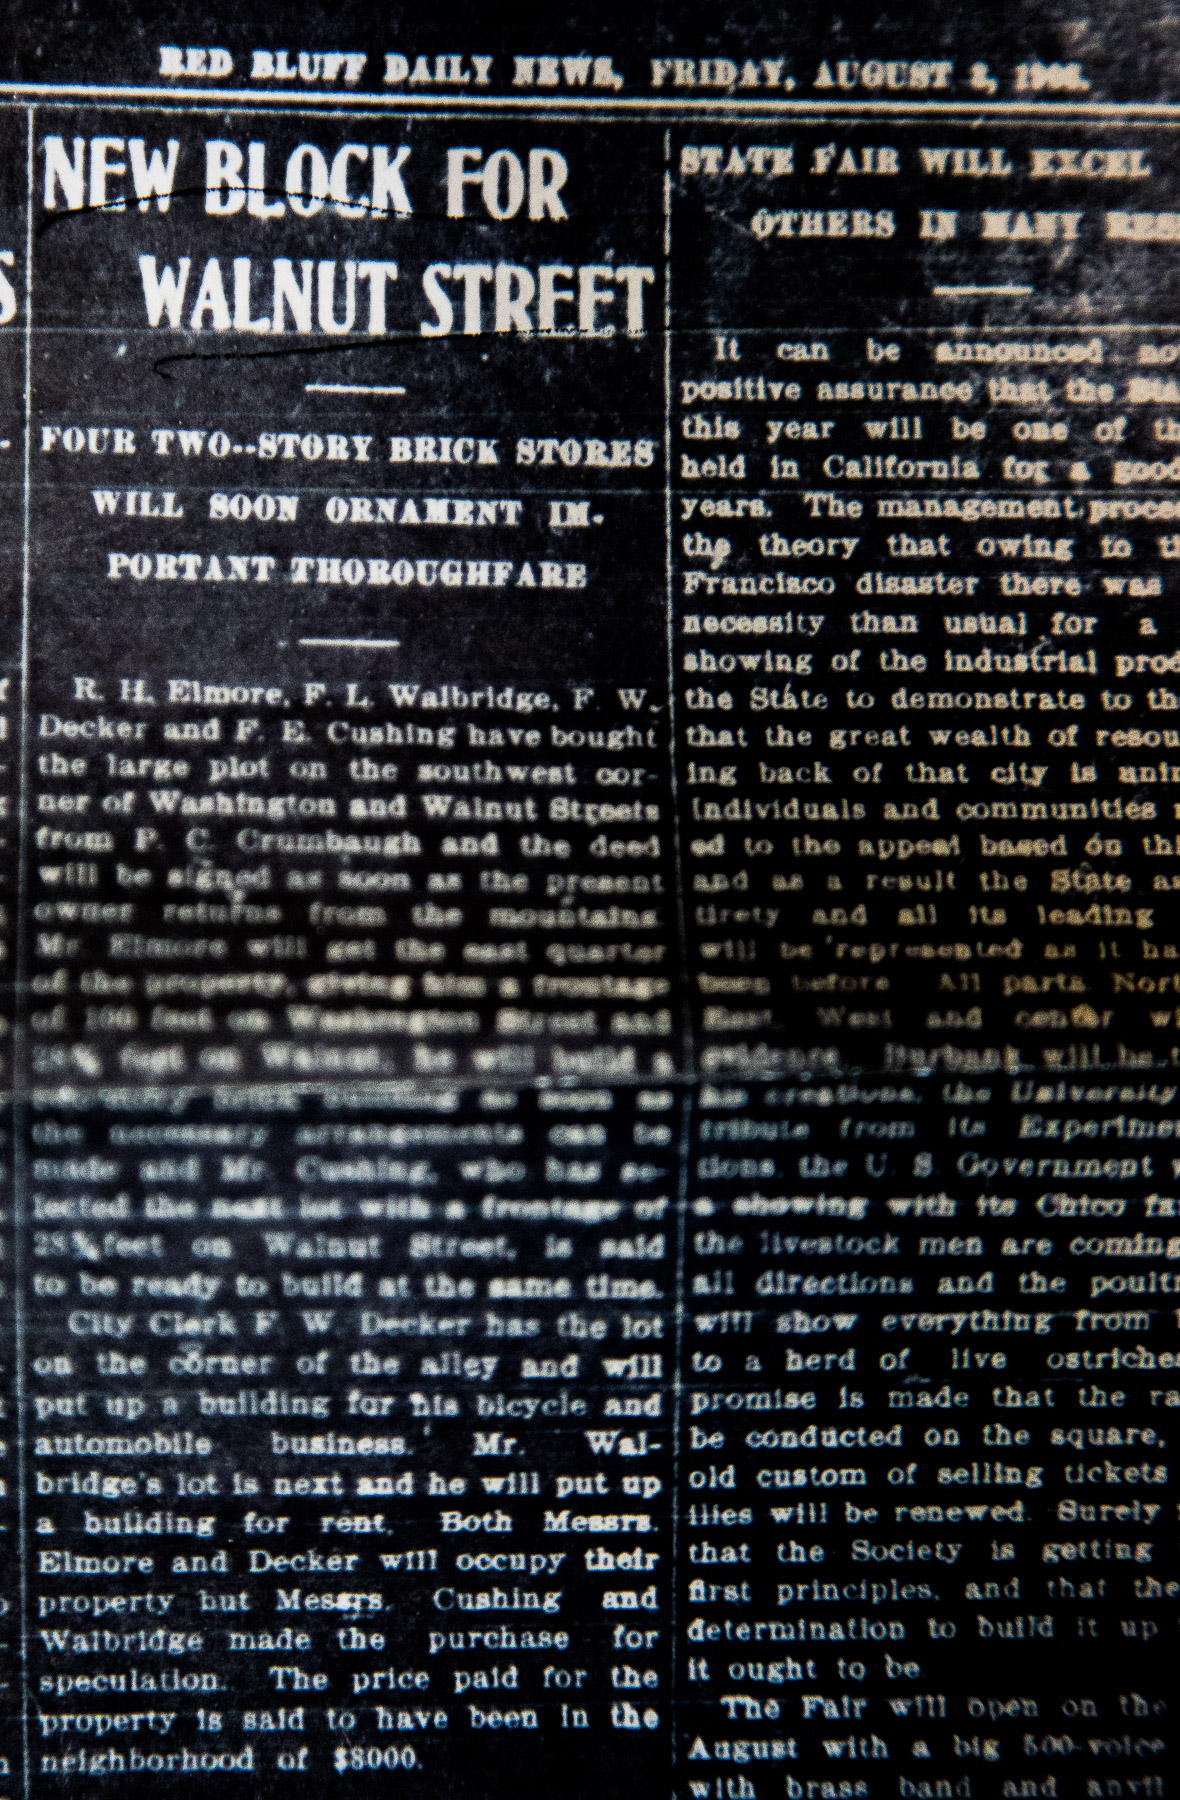 1906 New Block for Walnut Street - Red Bluff Daily News